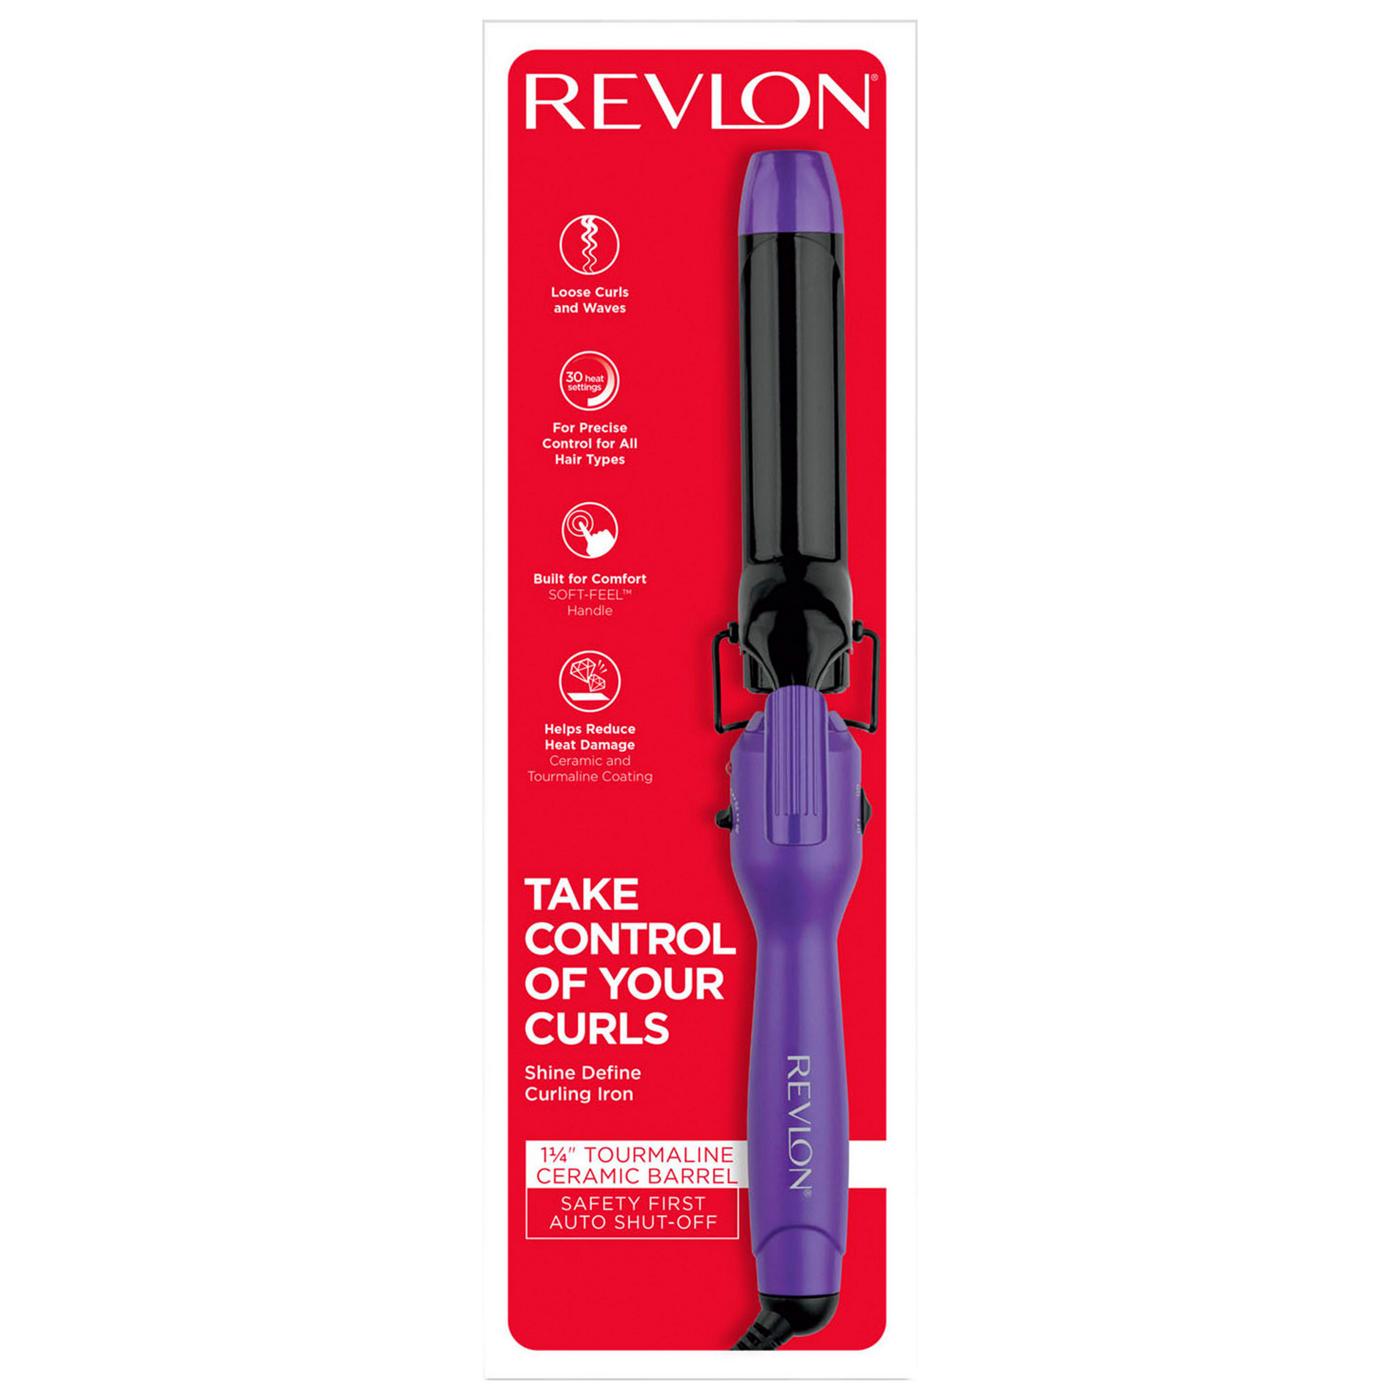 Revlon Ceramic Hair Curling Iron 1 -1/4 in; image 1 of 5